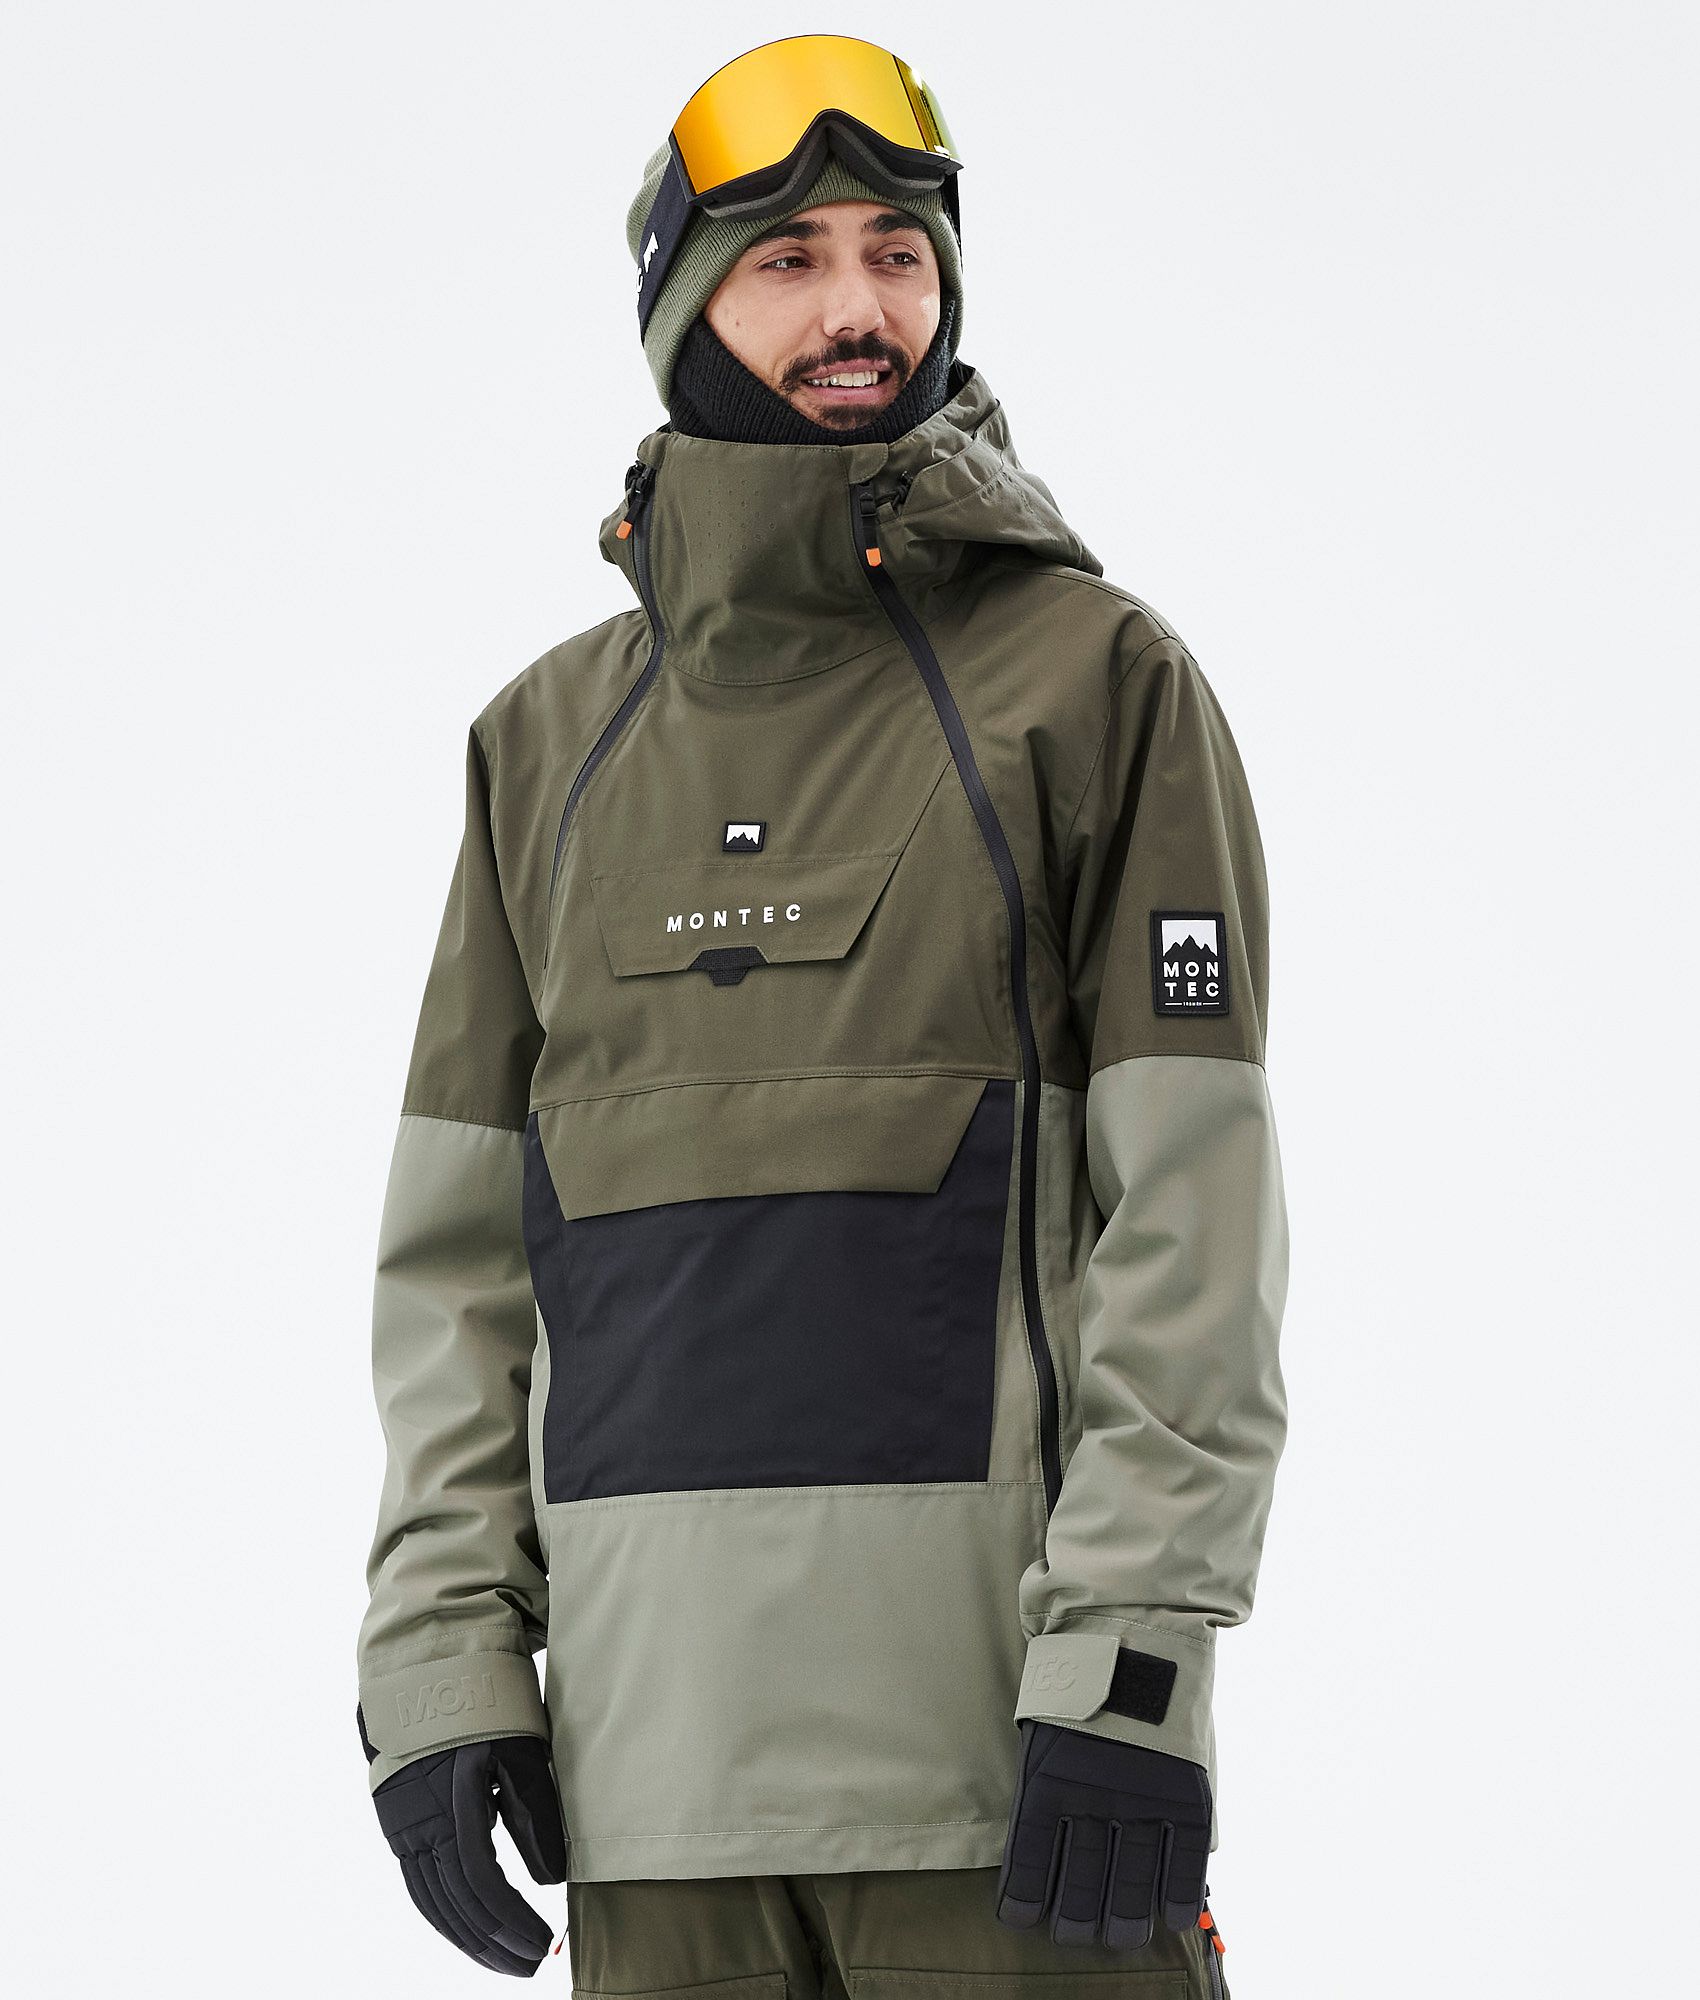 Memoryee Windproof Mens Ski Jackets Waterproof Fleece Lined Mountain Snowboarding Jacket with Zip Multi-Pockets 